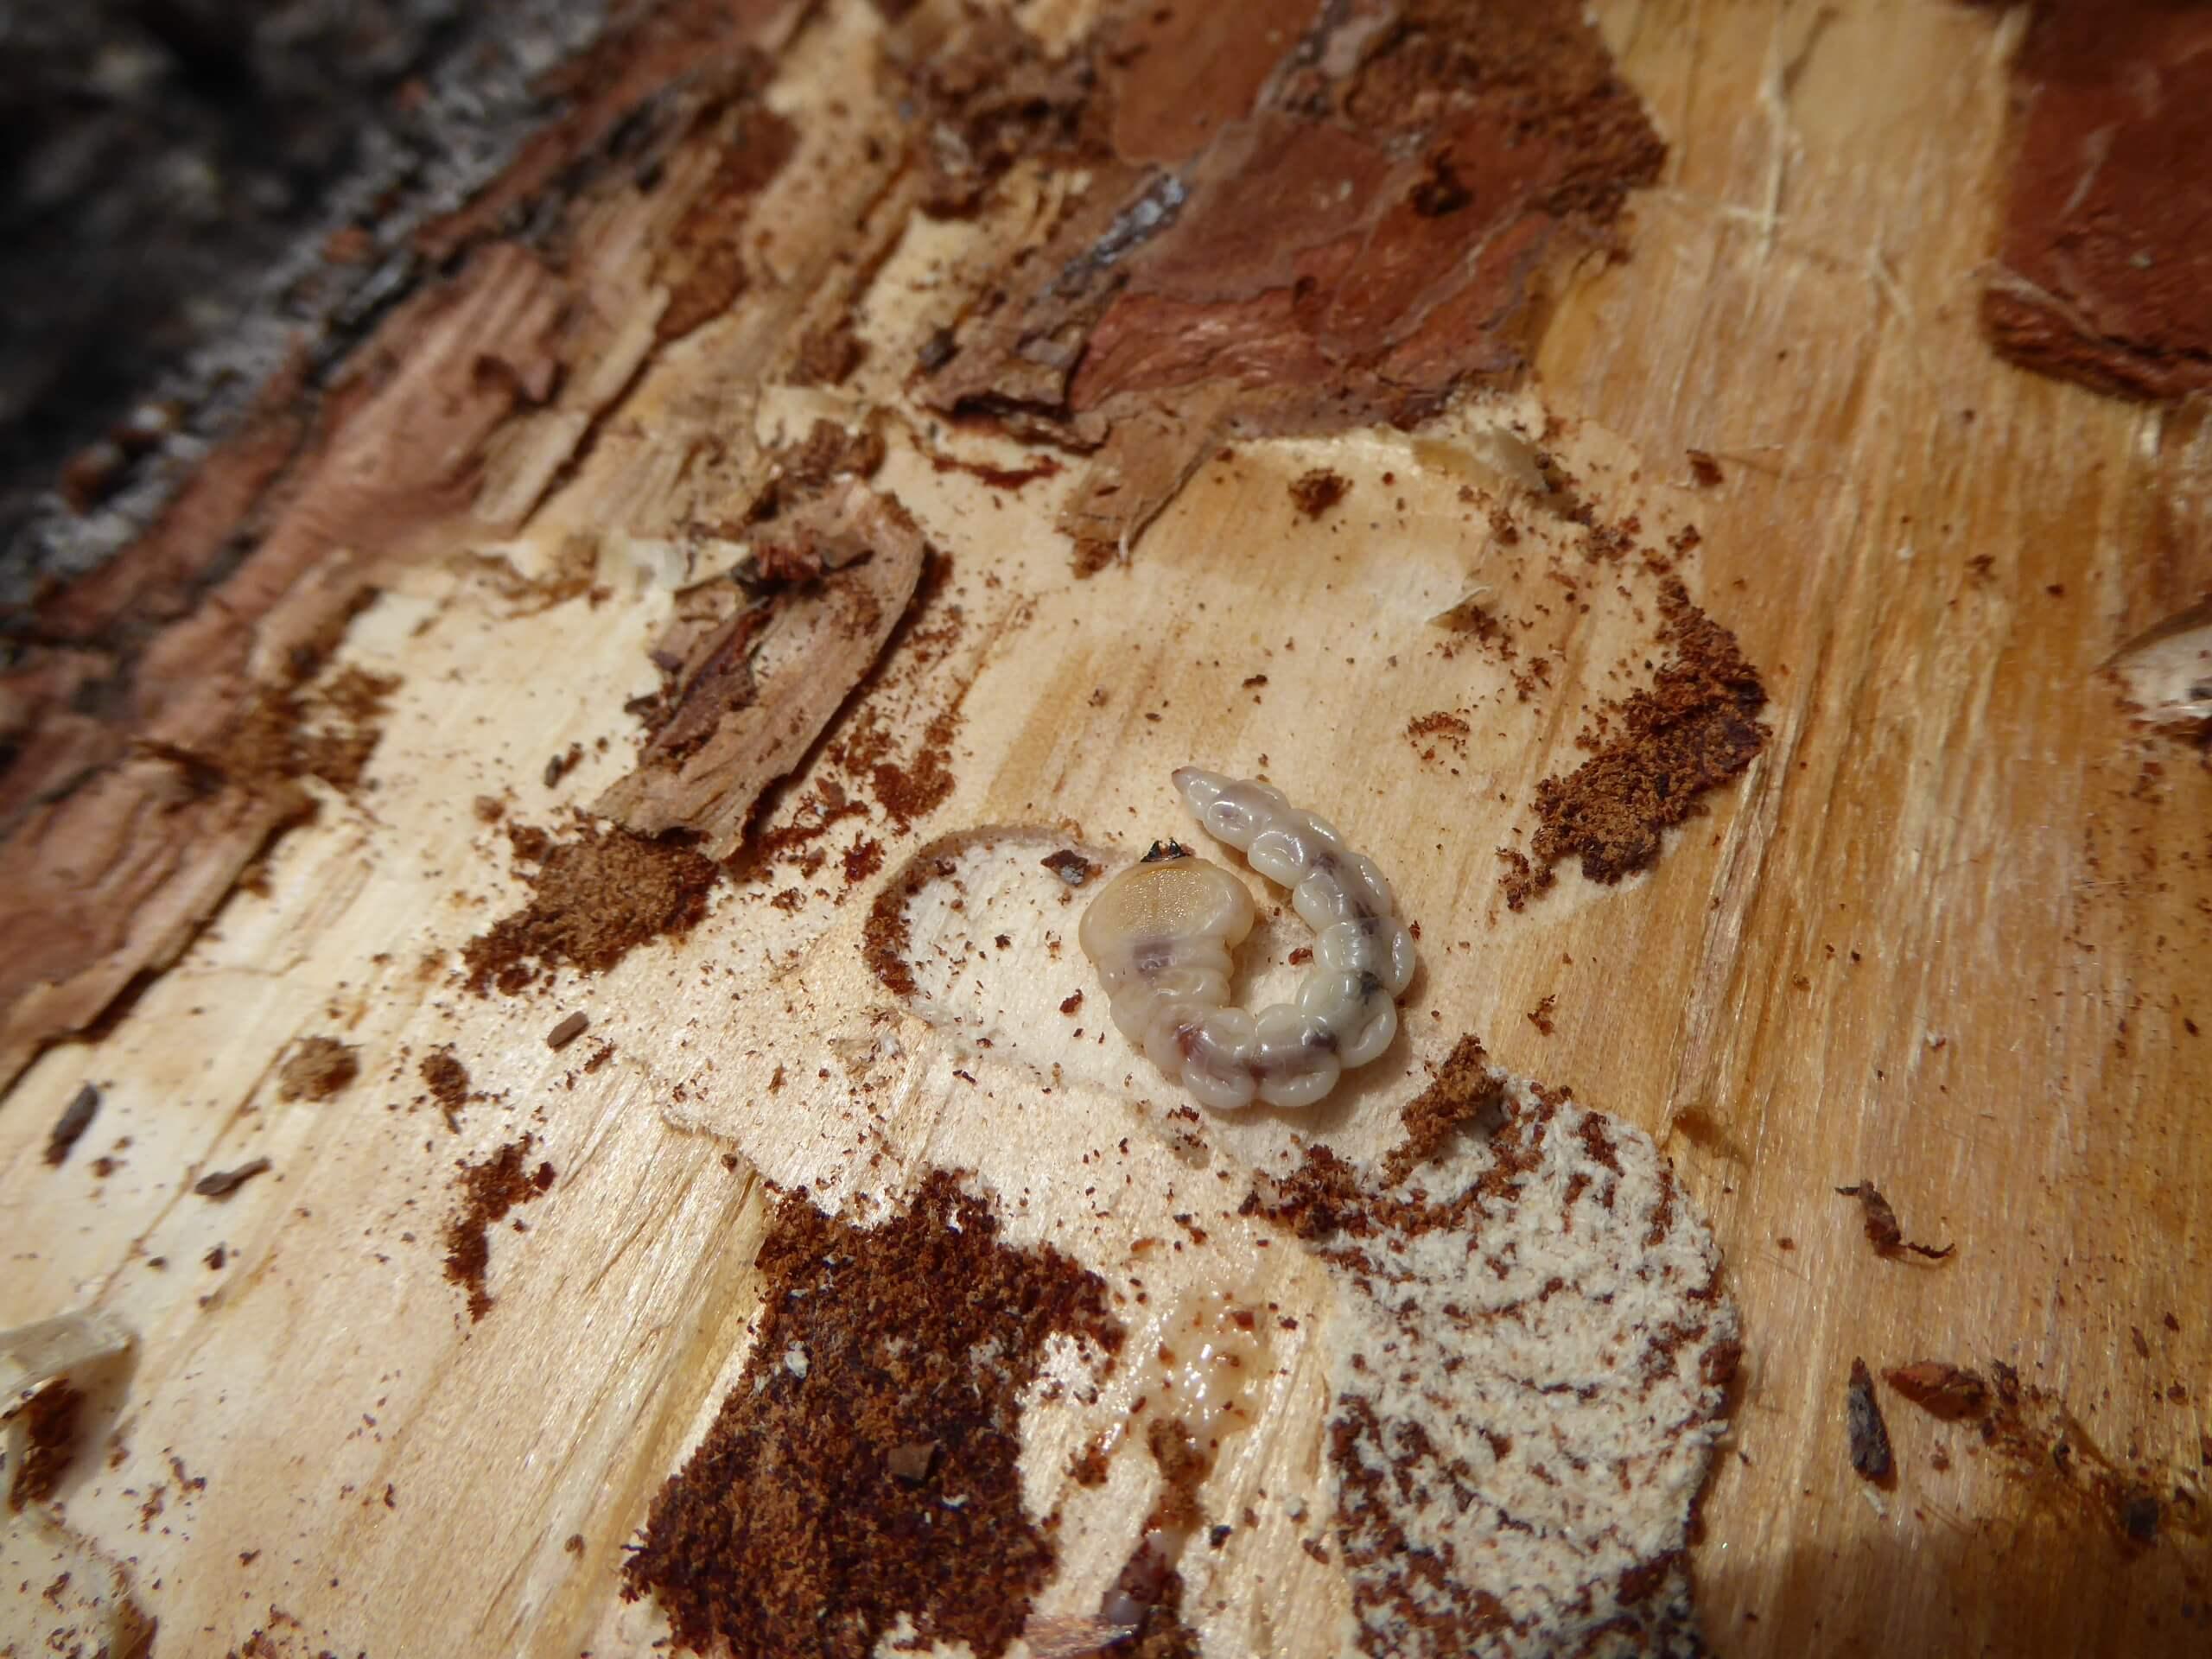 Pine sawyer larva.  Forest Society photo.